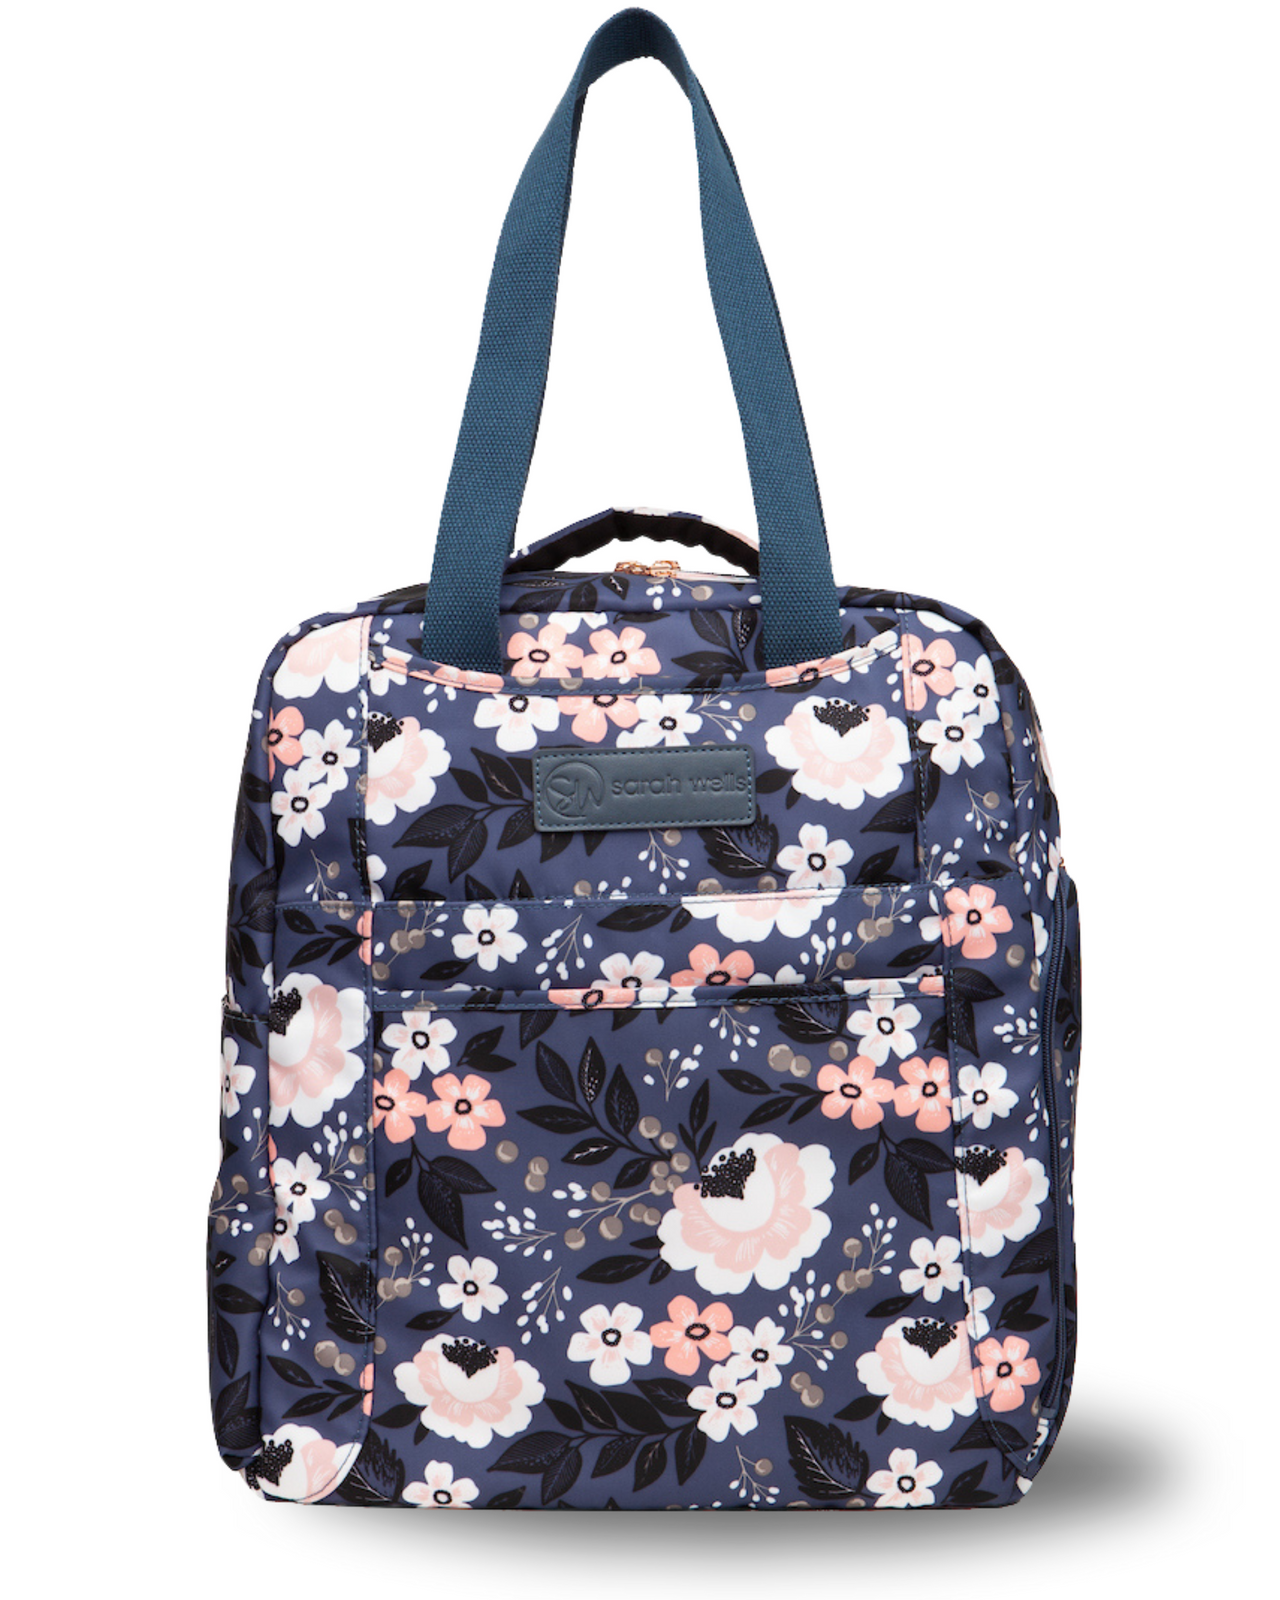 Kelly Backpack (Le Floral)